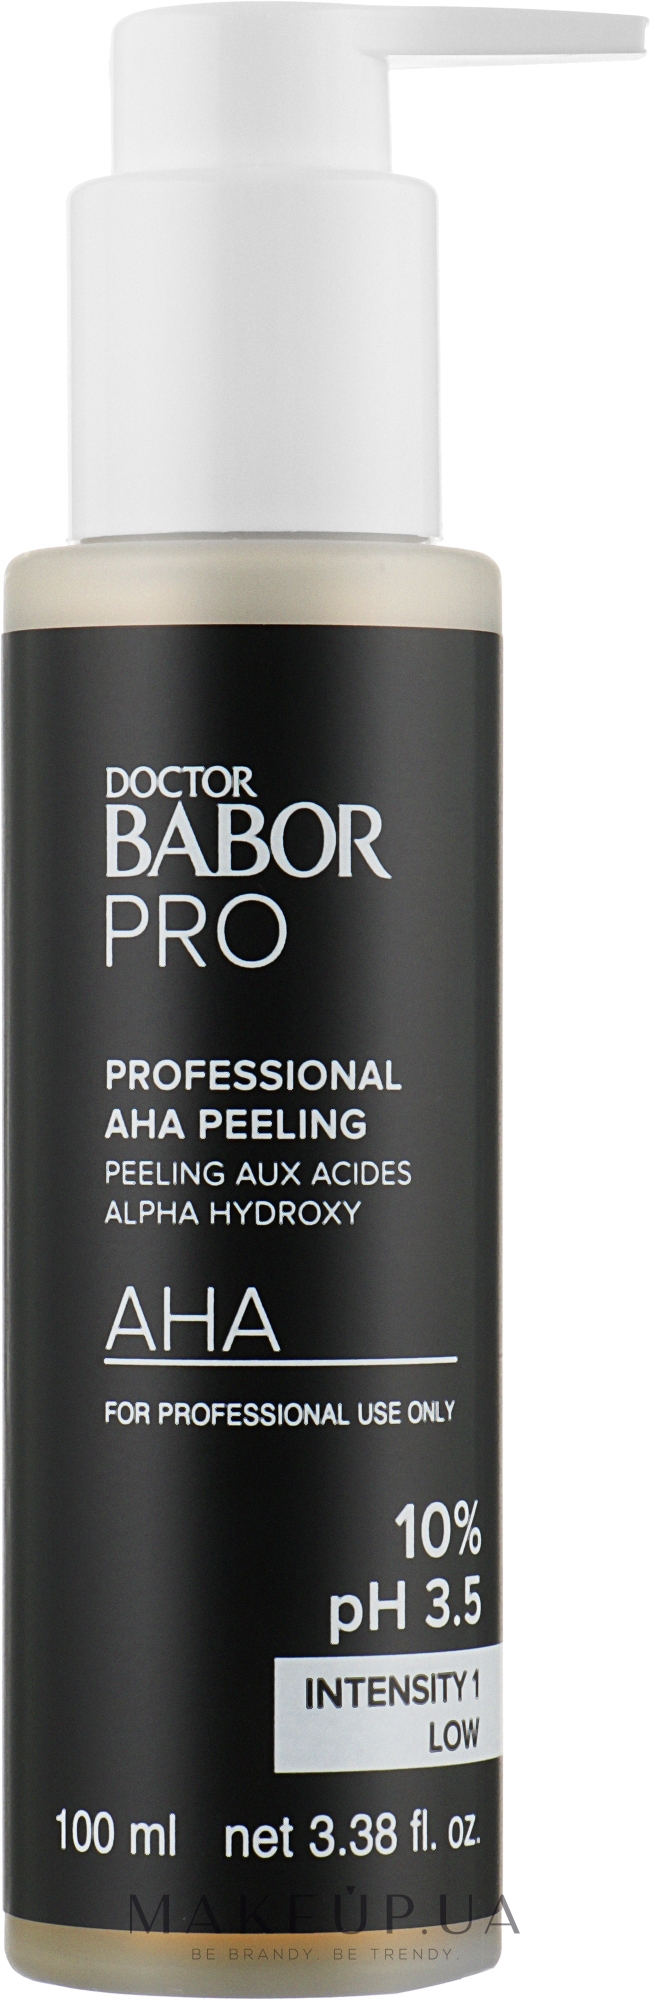 АНА-пилинг с фруктовыми кислотами 10% pH 3.5 - Doctor Babor Pro Professional AHA Peeling 10% pH 3.5 Intensity 1 Low — фото 100ml